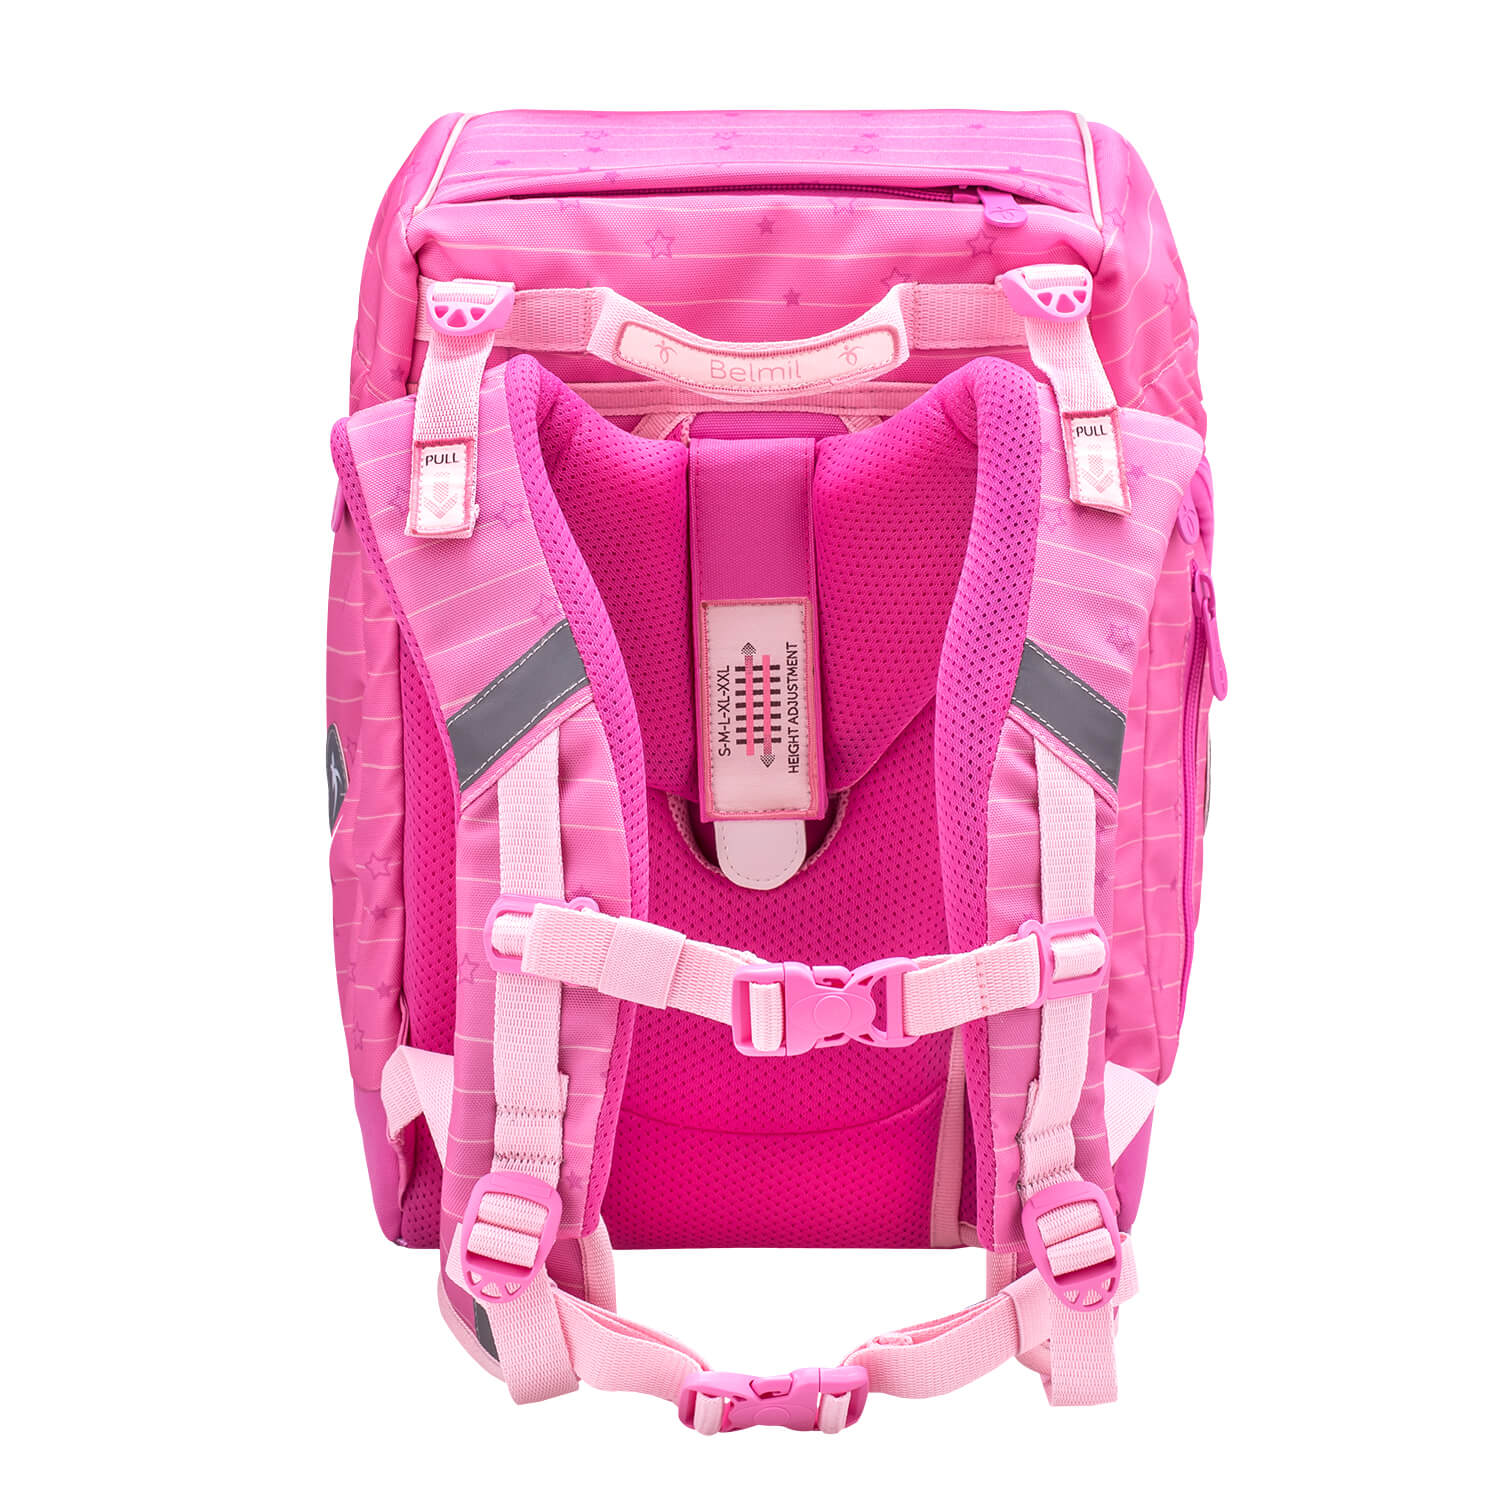 Premium Comfy Plus Candy Schoolbag set 5pcs.